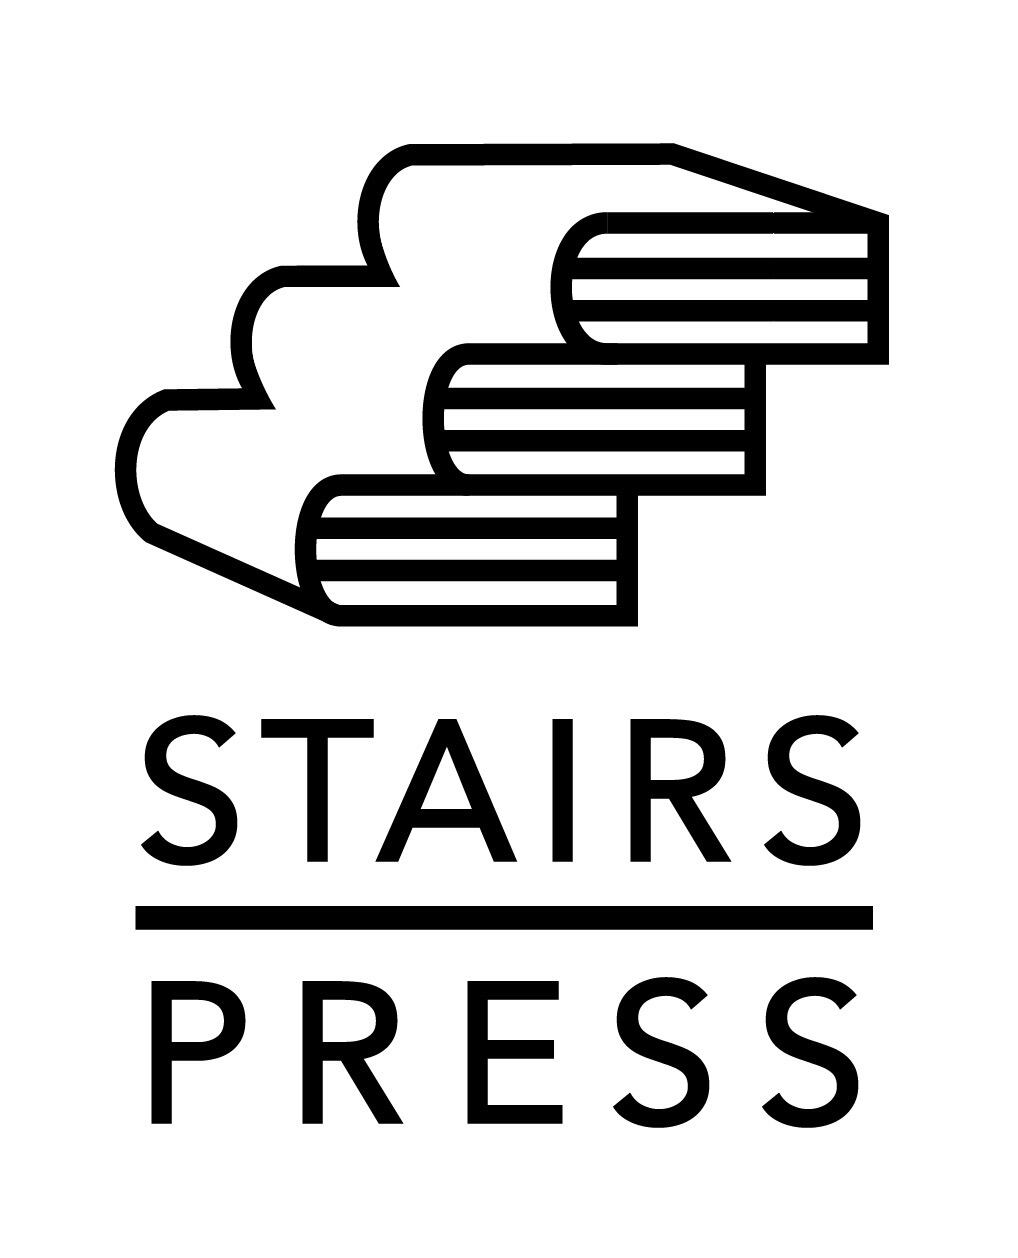 STAIRS PRESS